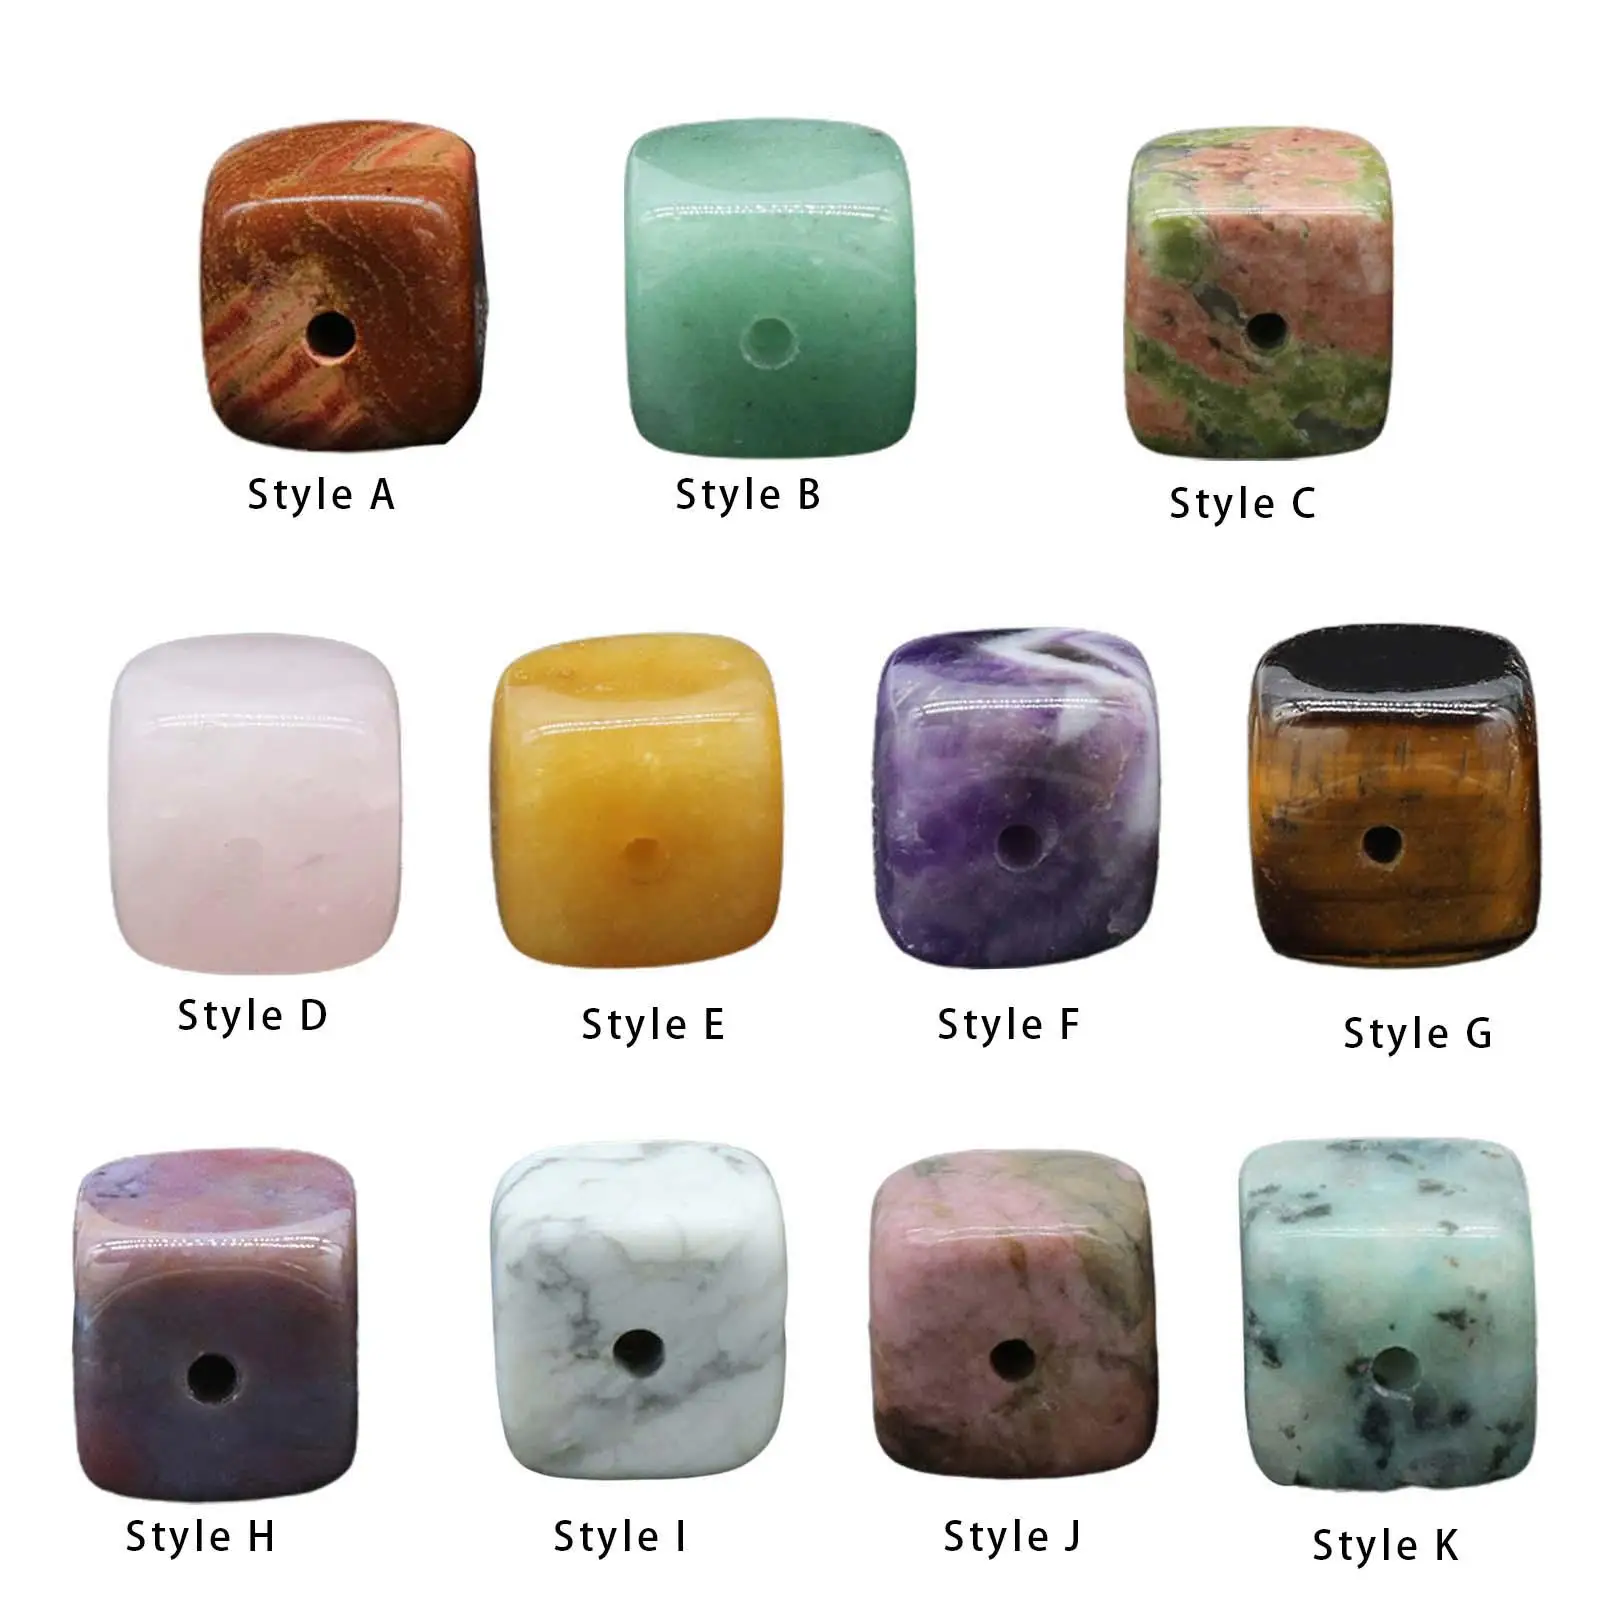 

Square Craft Gemstone Incense Holder Agate Stone Incense Holder for Office Home Utilities Meditation Room Yoga Accessories